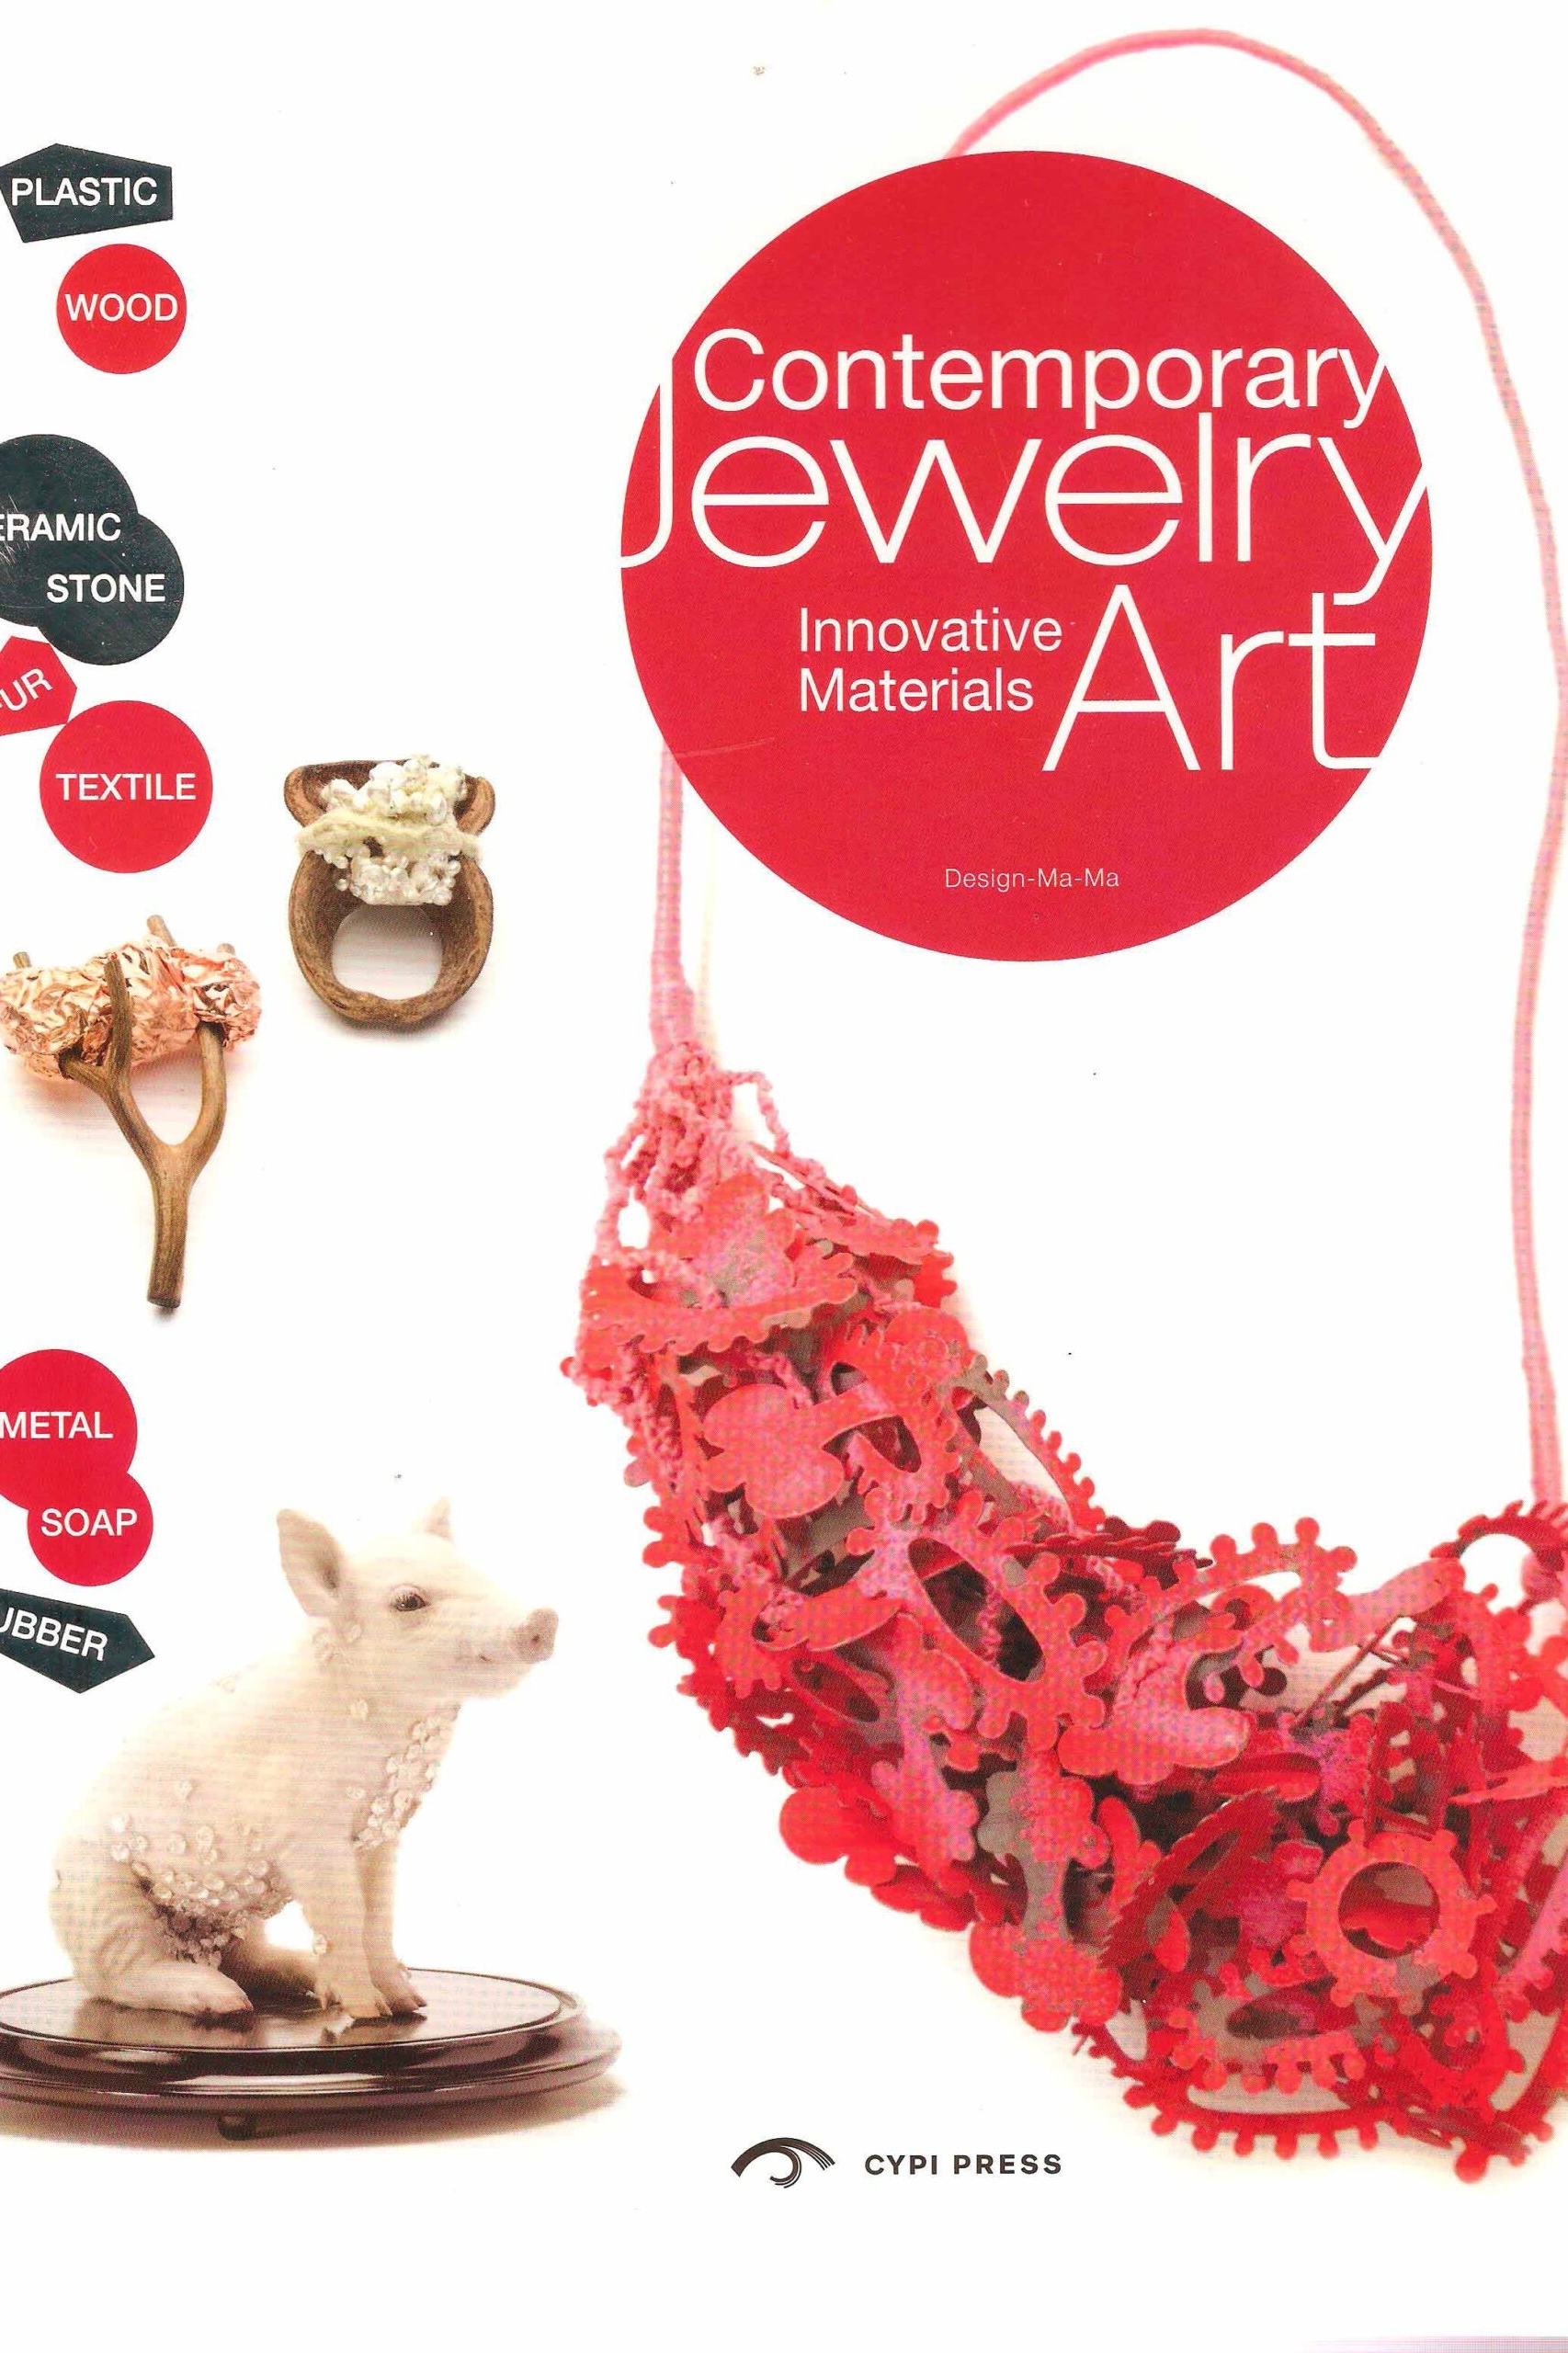 Contemporary-Jewelry-Innovative-Materials-Art-libro-joyeria-Marina-Massone-entrevista-La-joyeria-de-autor